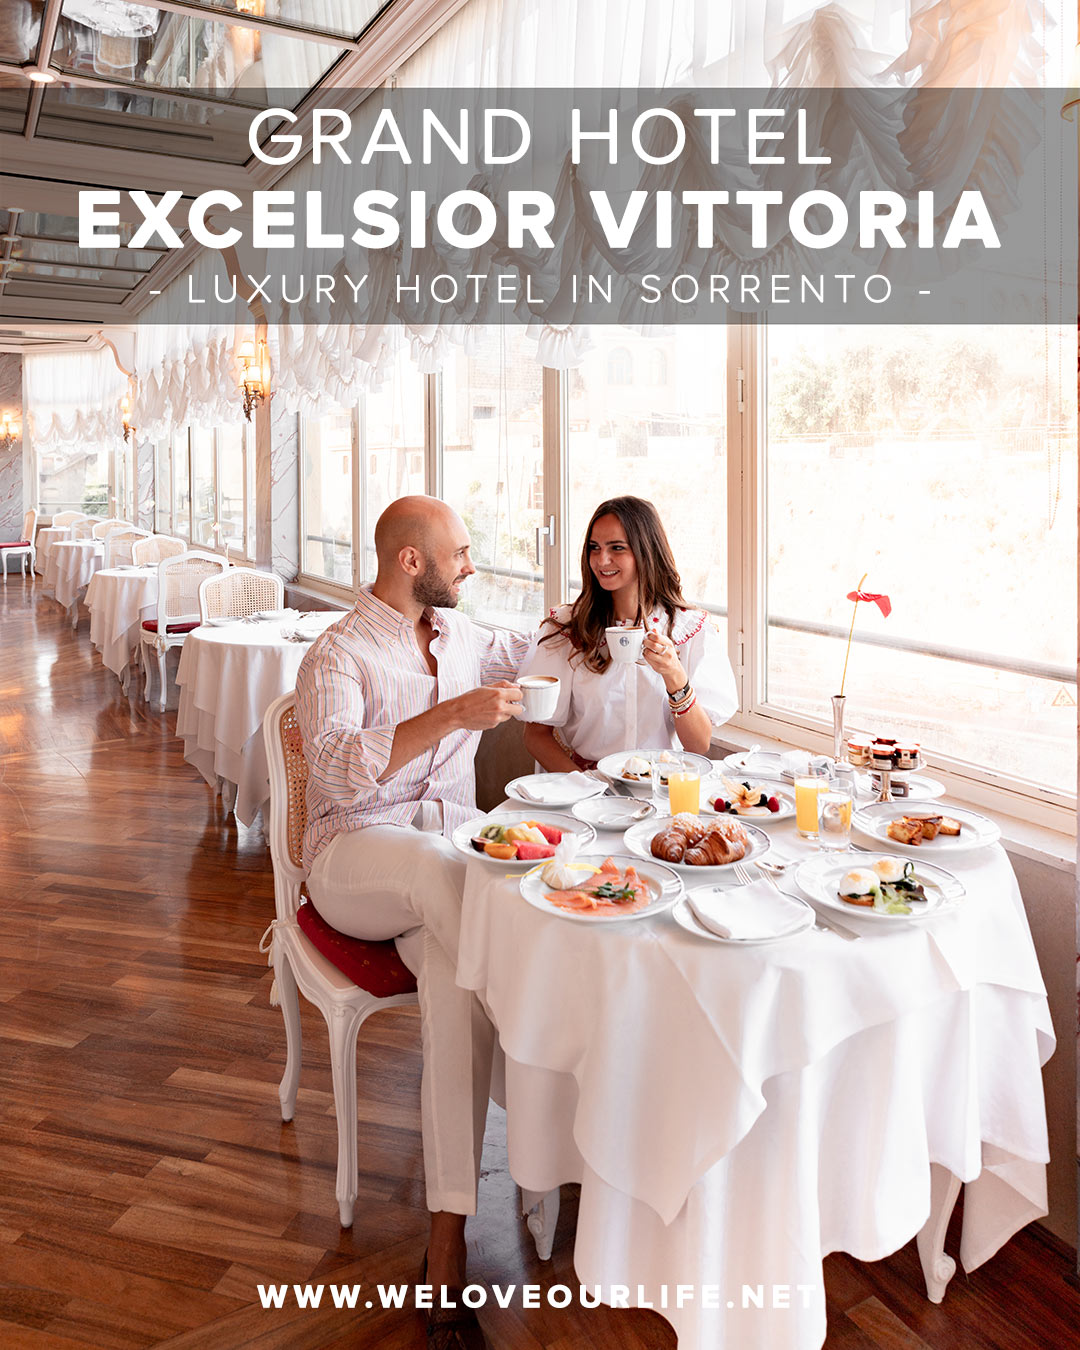 Grand Hotel Excelsior Vittoria - Luxury Hotel in Sorrento, Italy 